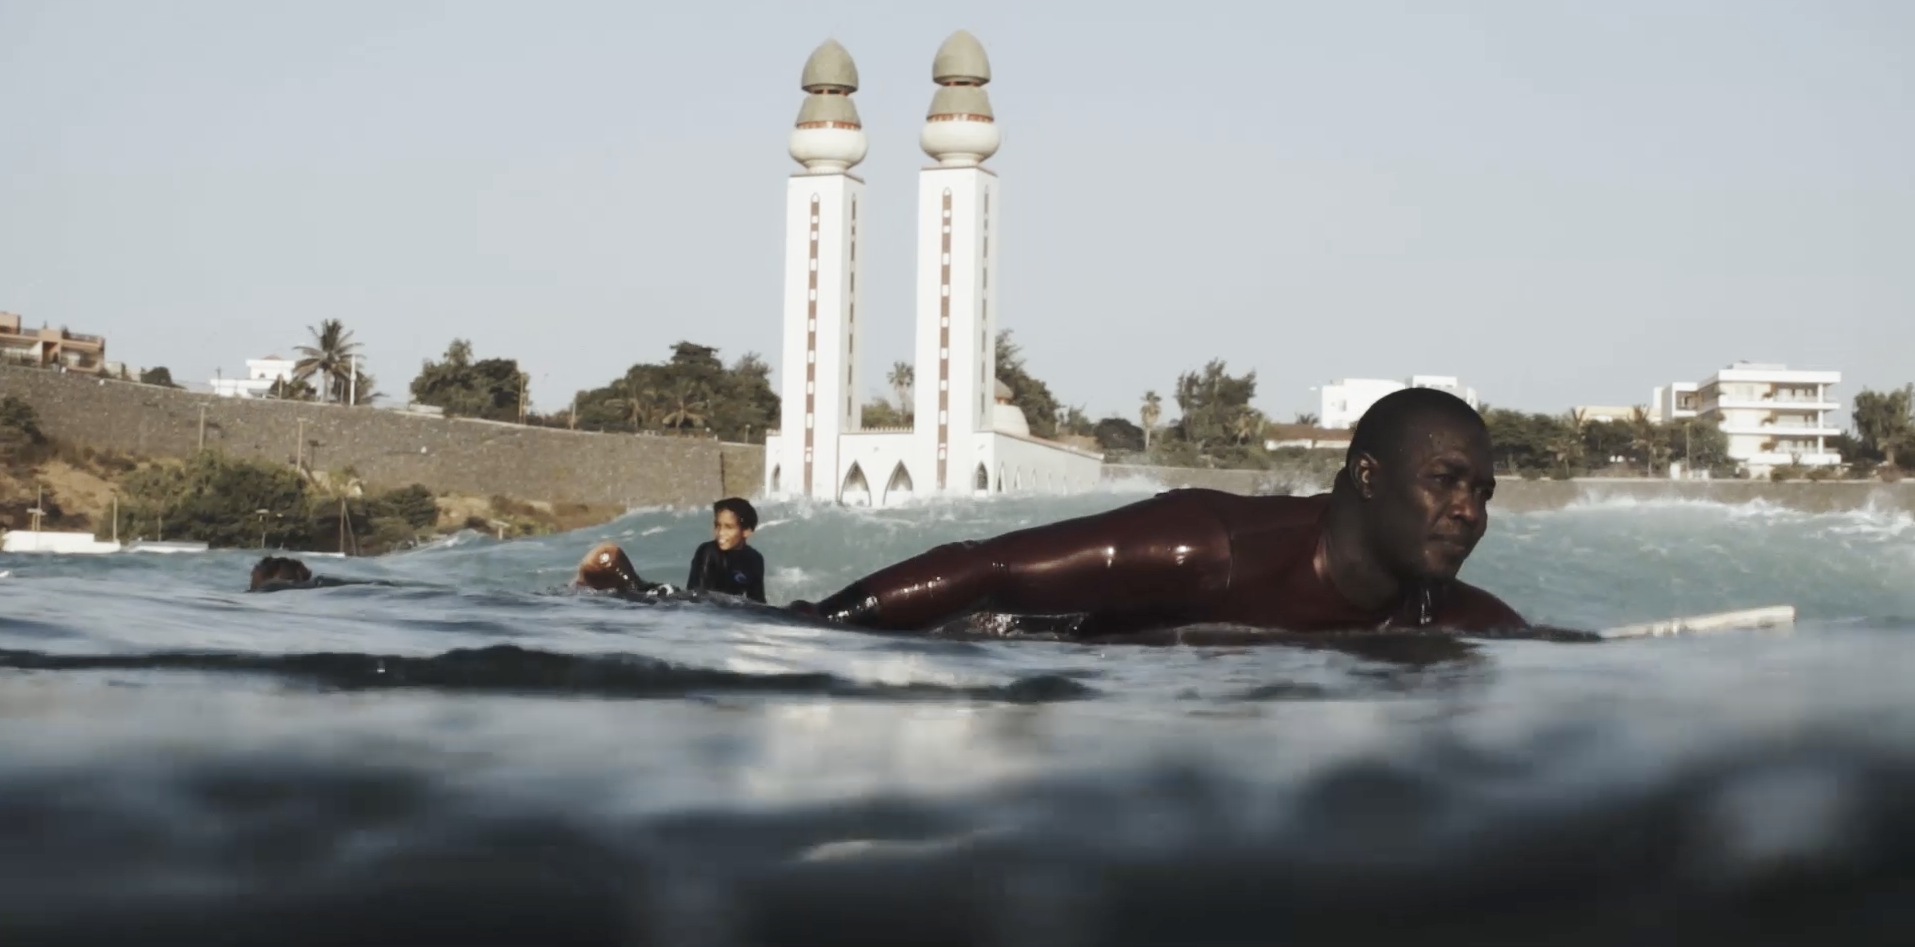 Flat days in Saint Louis, Senegal, by Hannes Grauweihler, Surfers Hangout